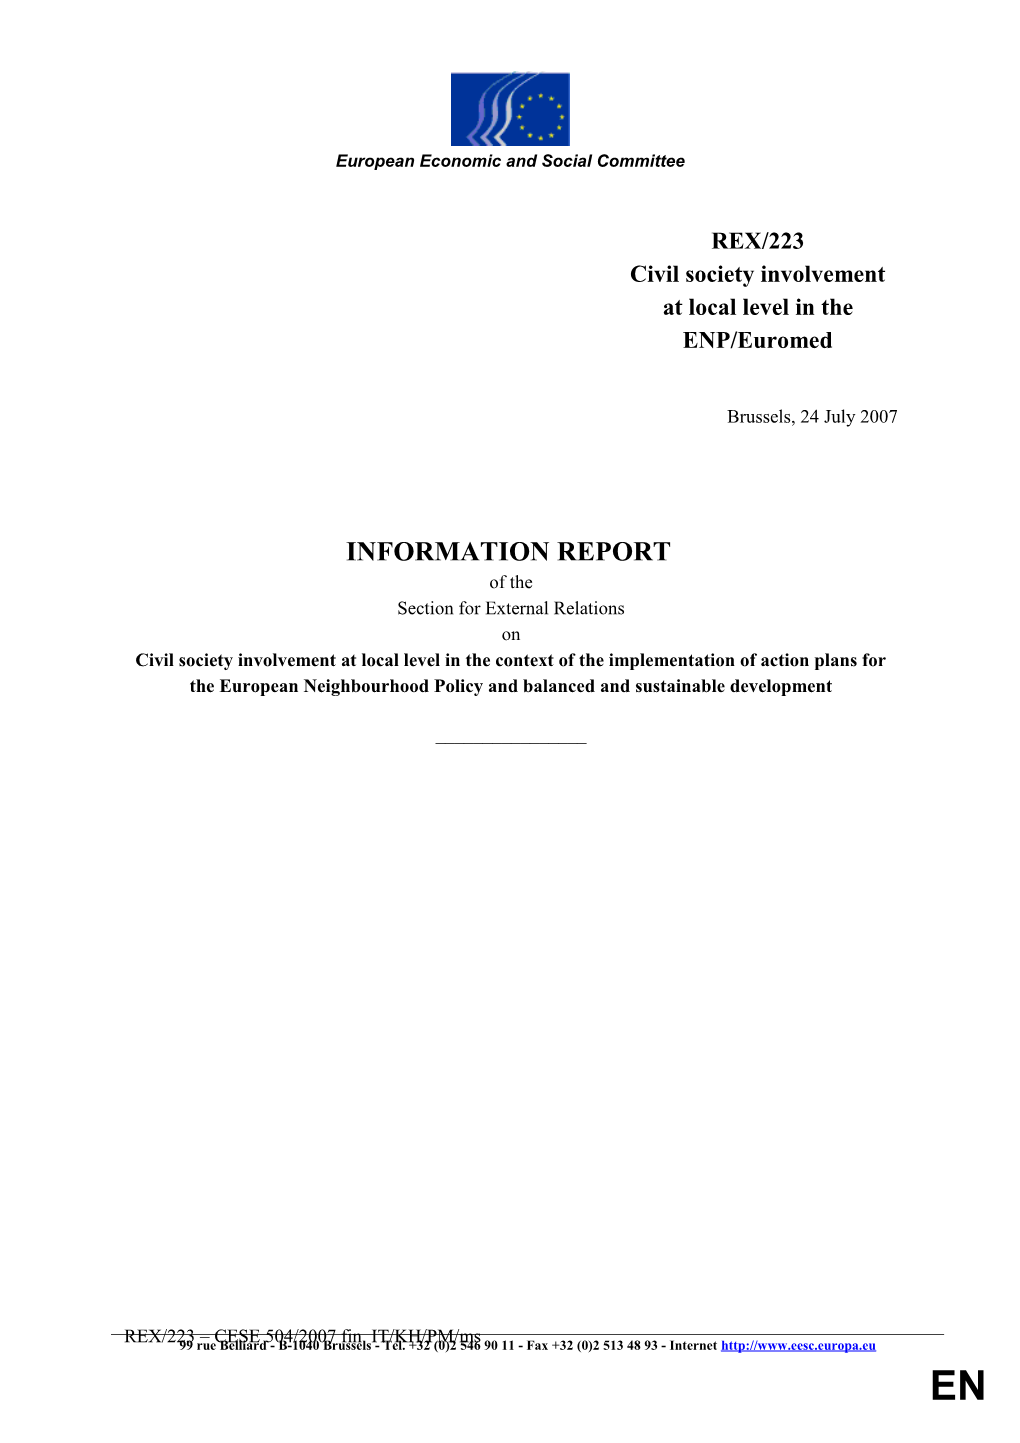 Information Report CES504-2007 FIN RI EN